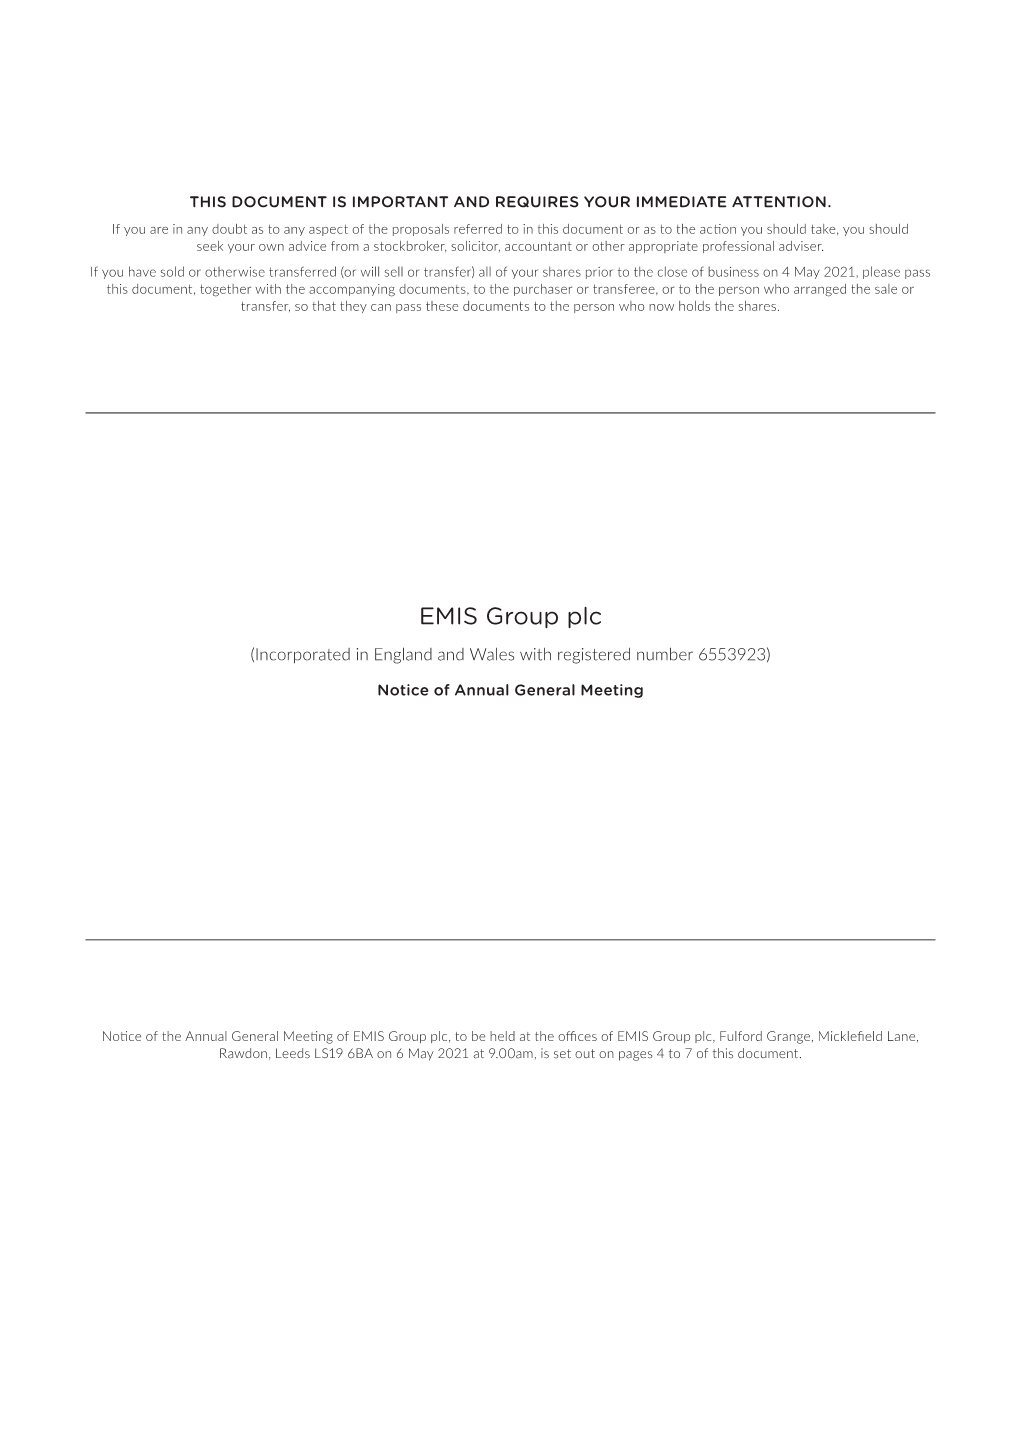 EMIS Group Notice of Annual General Meeting 2021